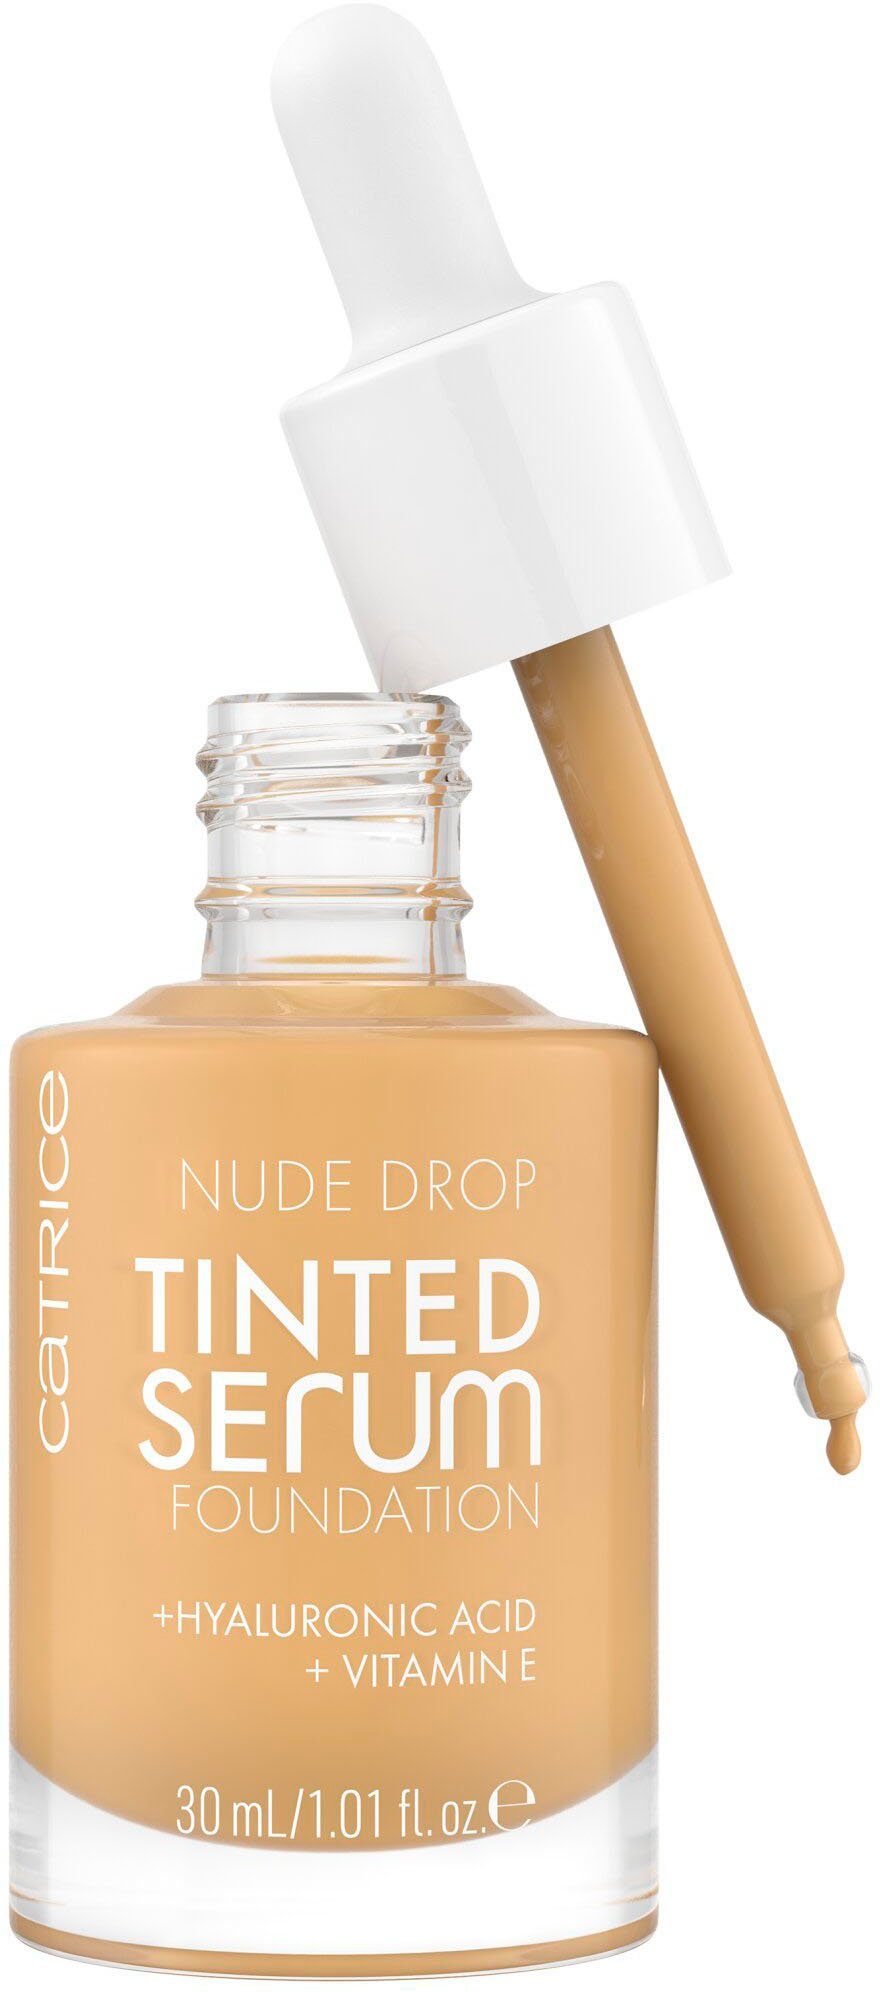 Foundation Serum Nude Catrice 038W Foundation Tinted Drop nude